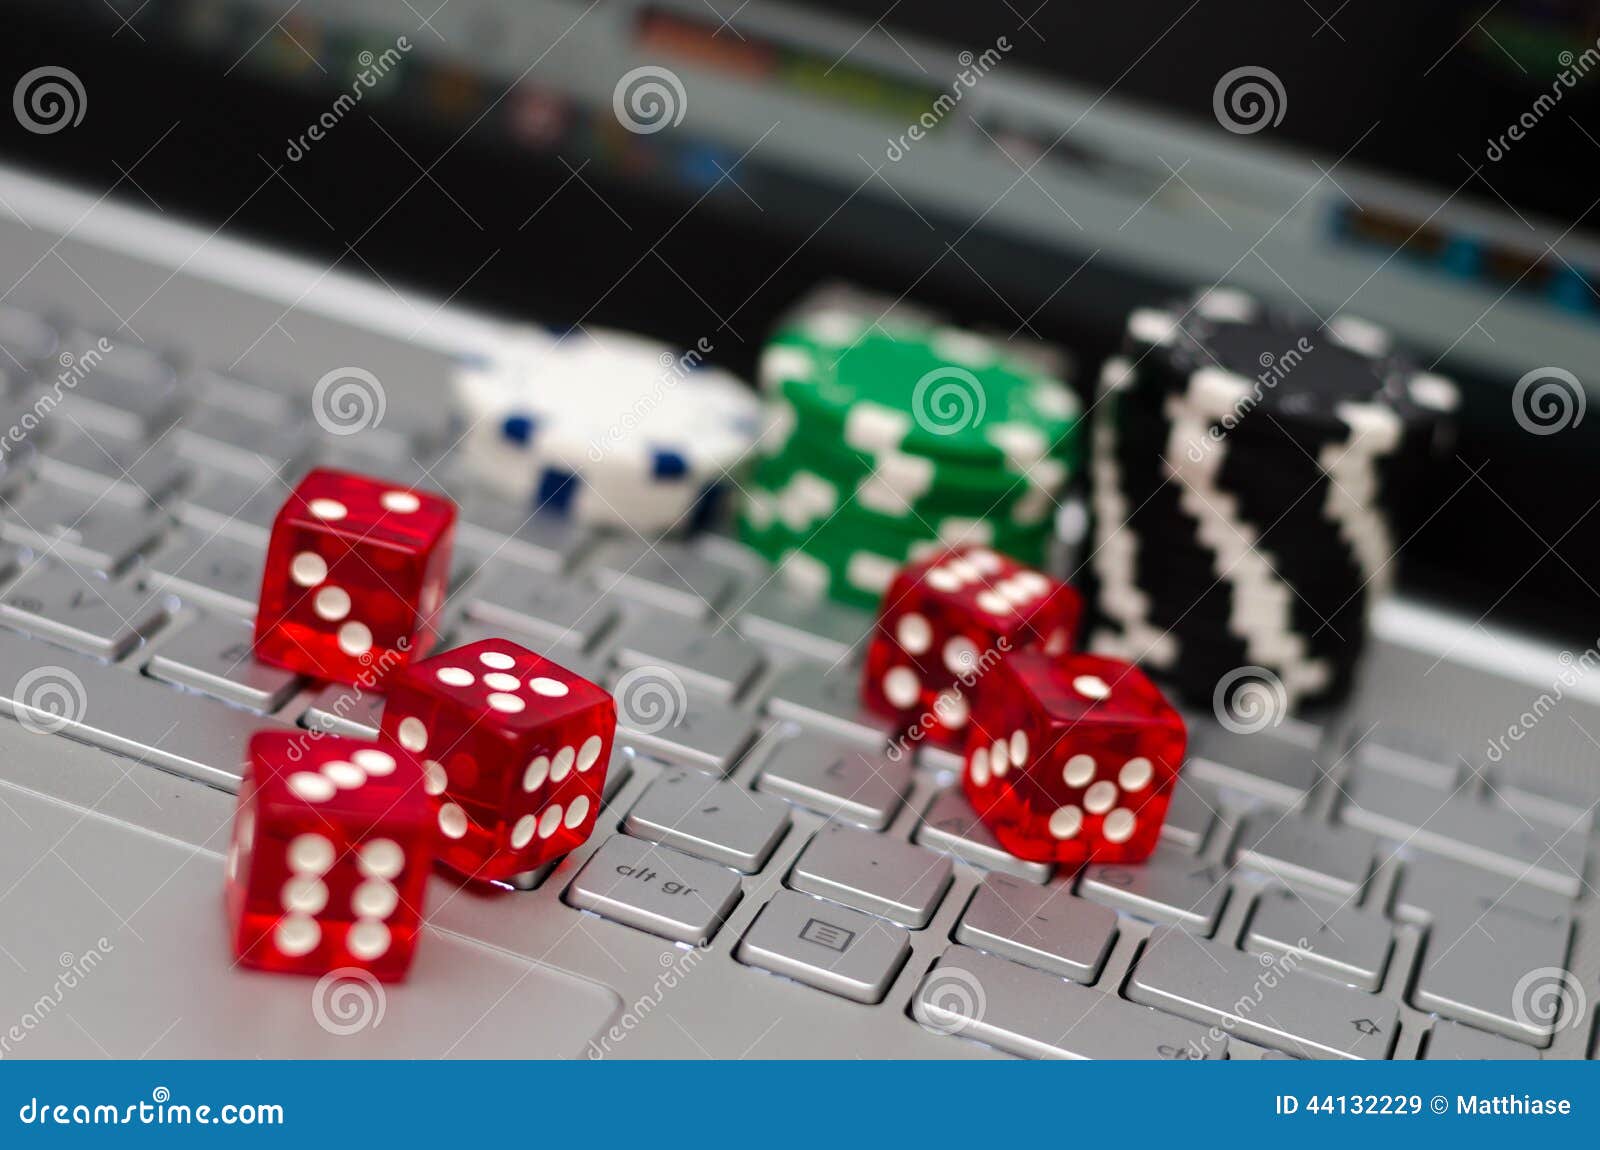 online-gambling-addiction-concept-image-44132229.jpg